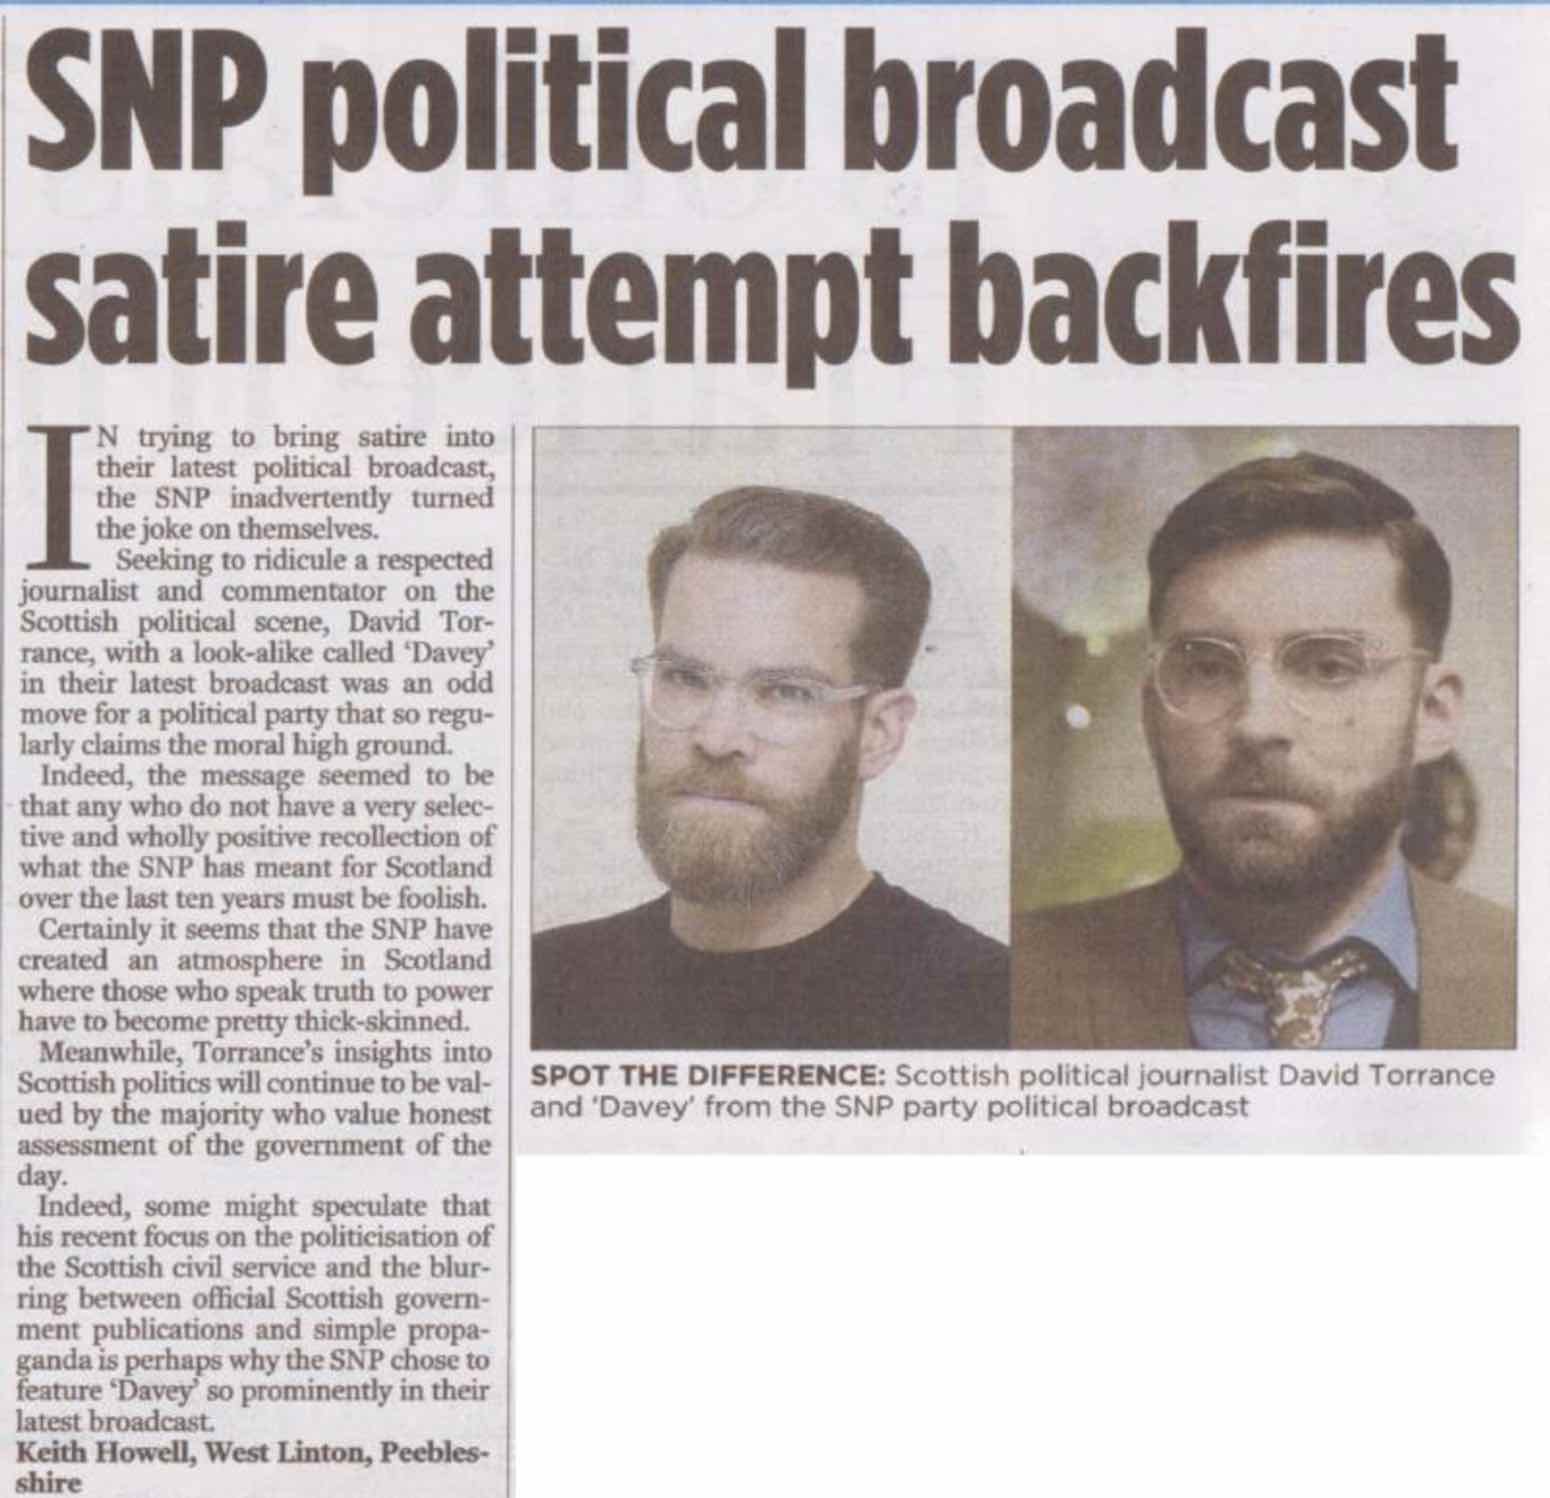 SNP political broadcast satire